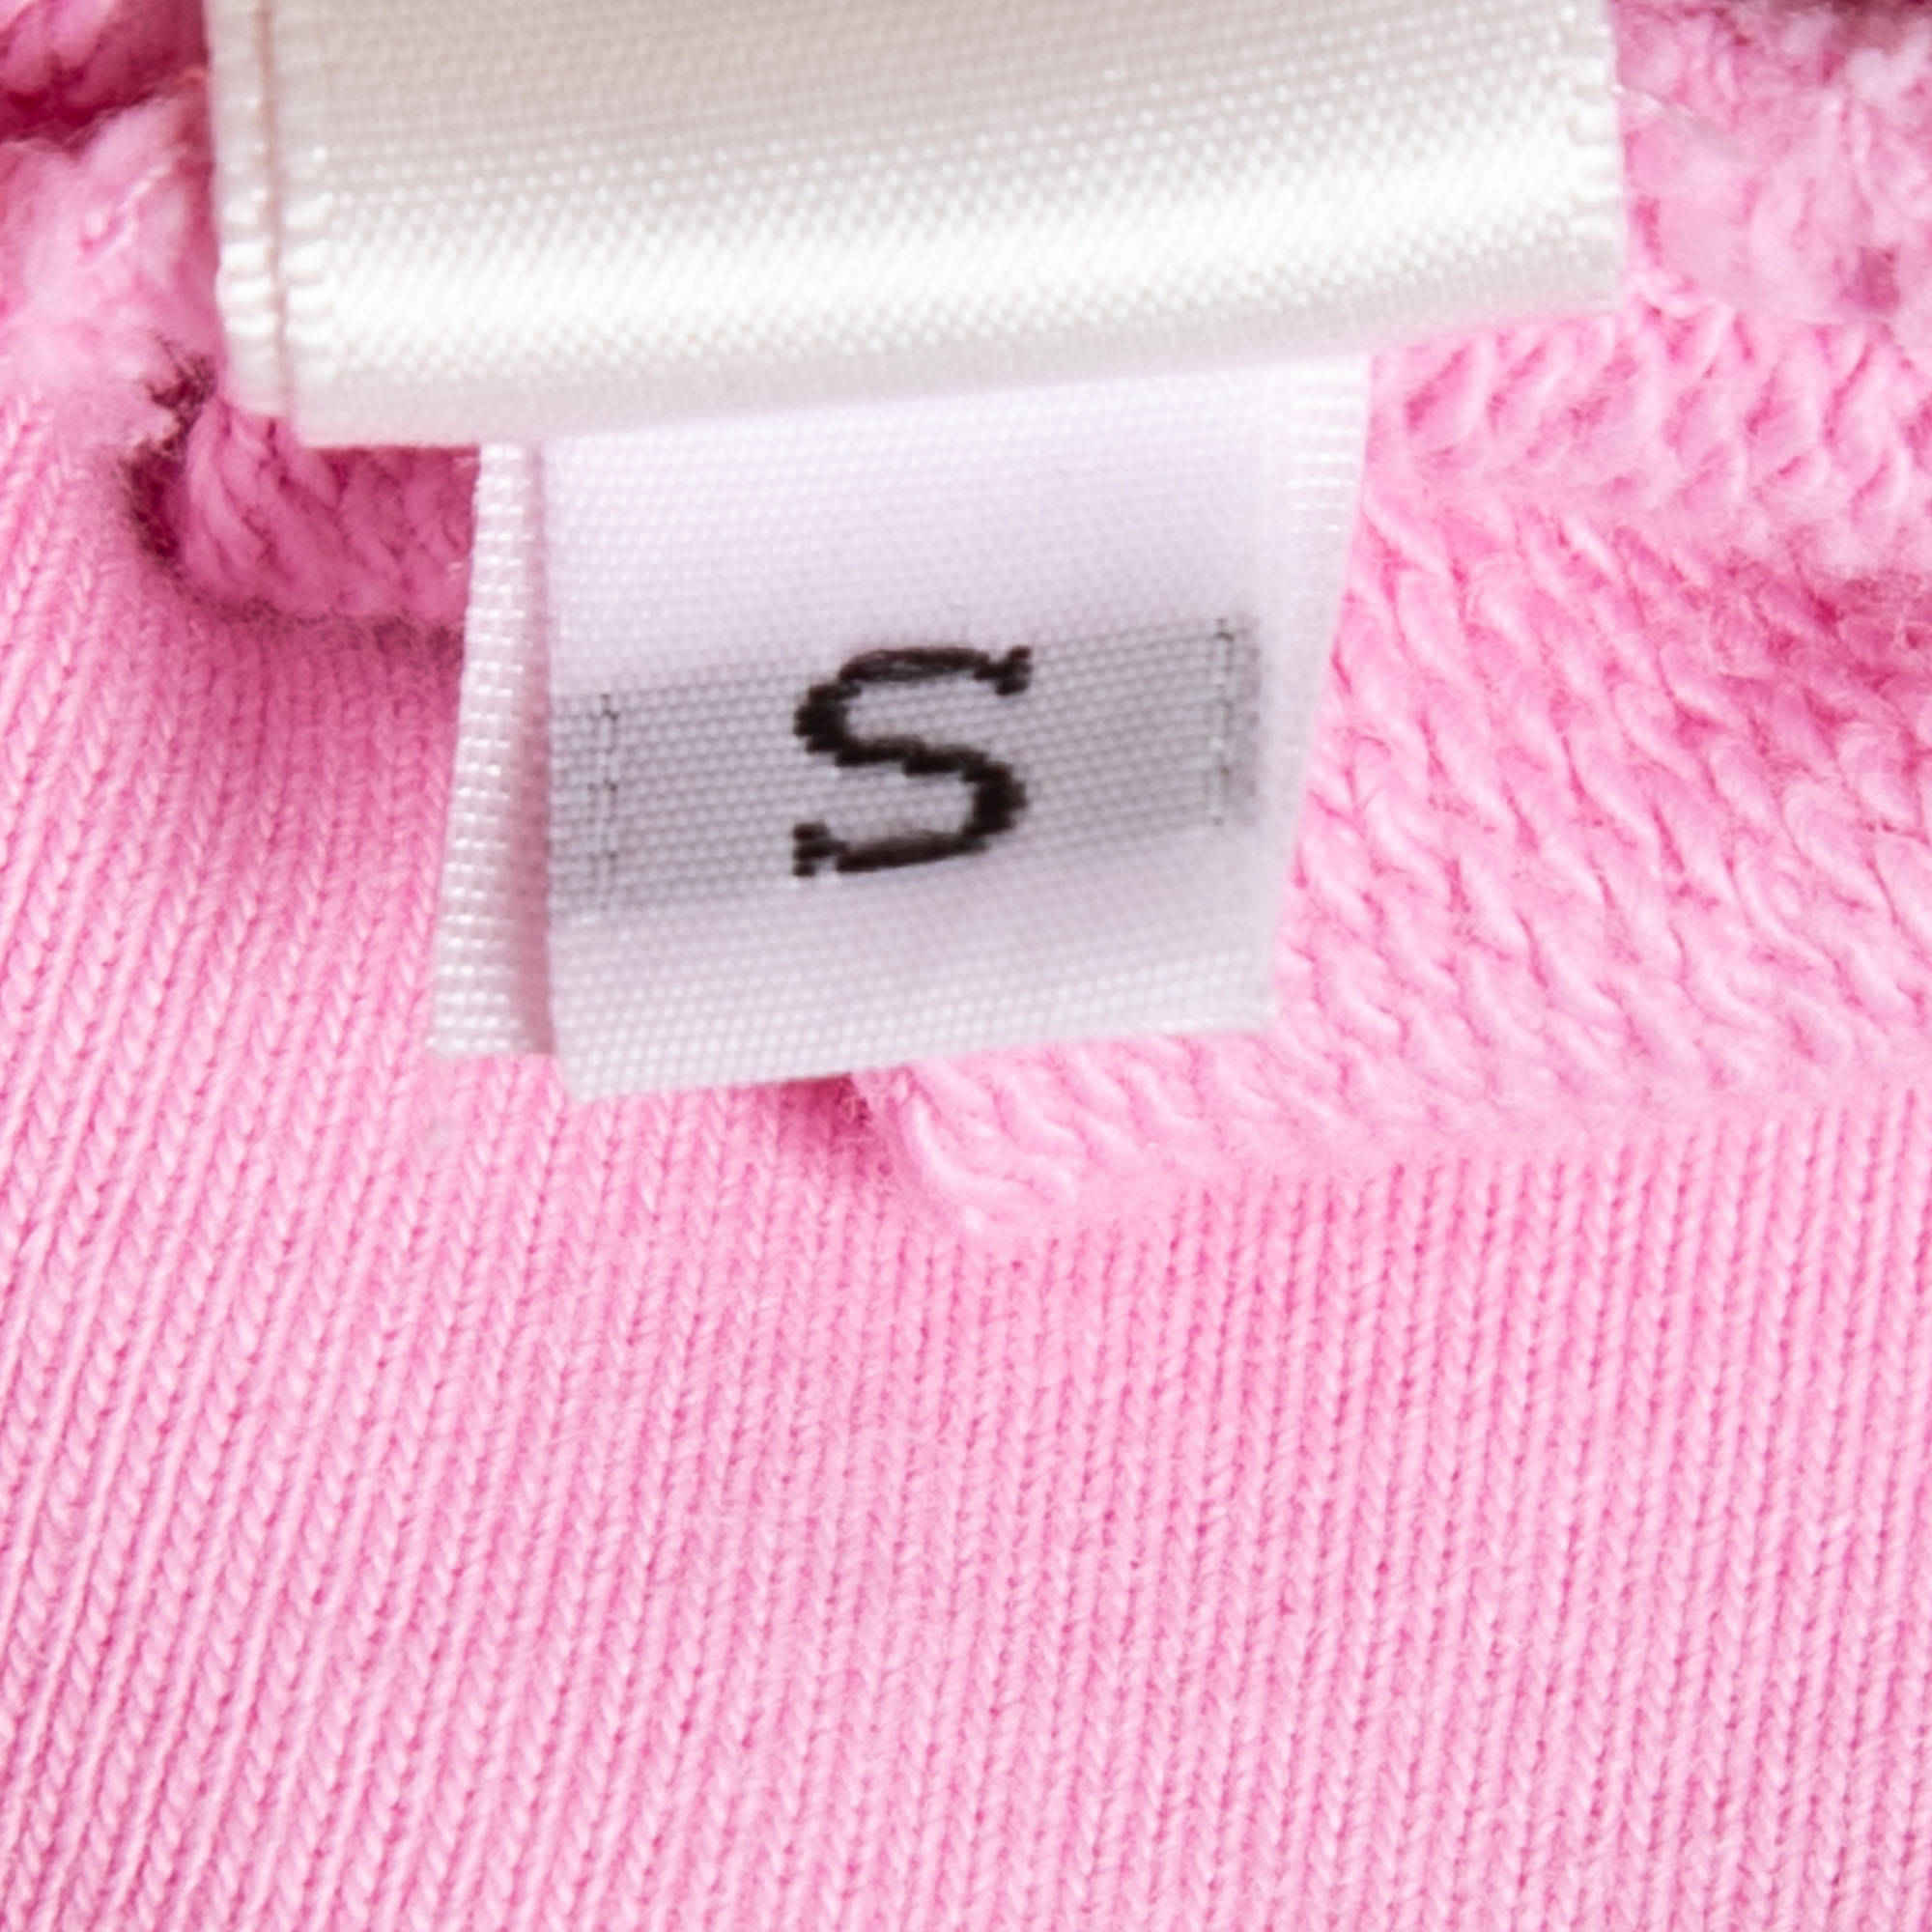 Cotton Citizen Pink Cotton Knit Crew Neck Cropped Sweatshirt S